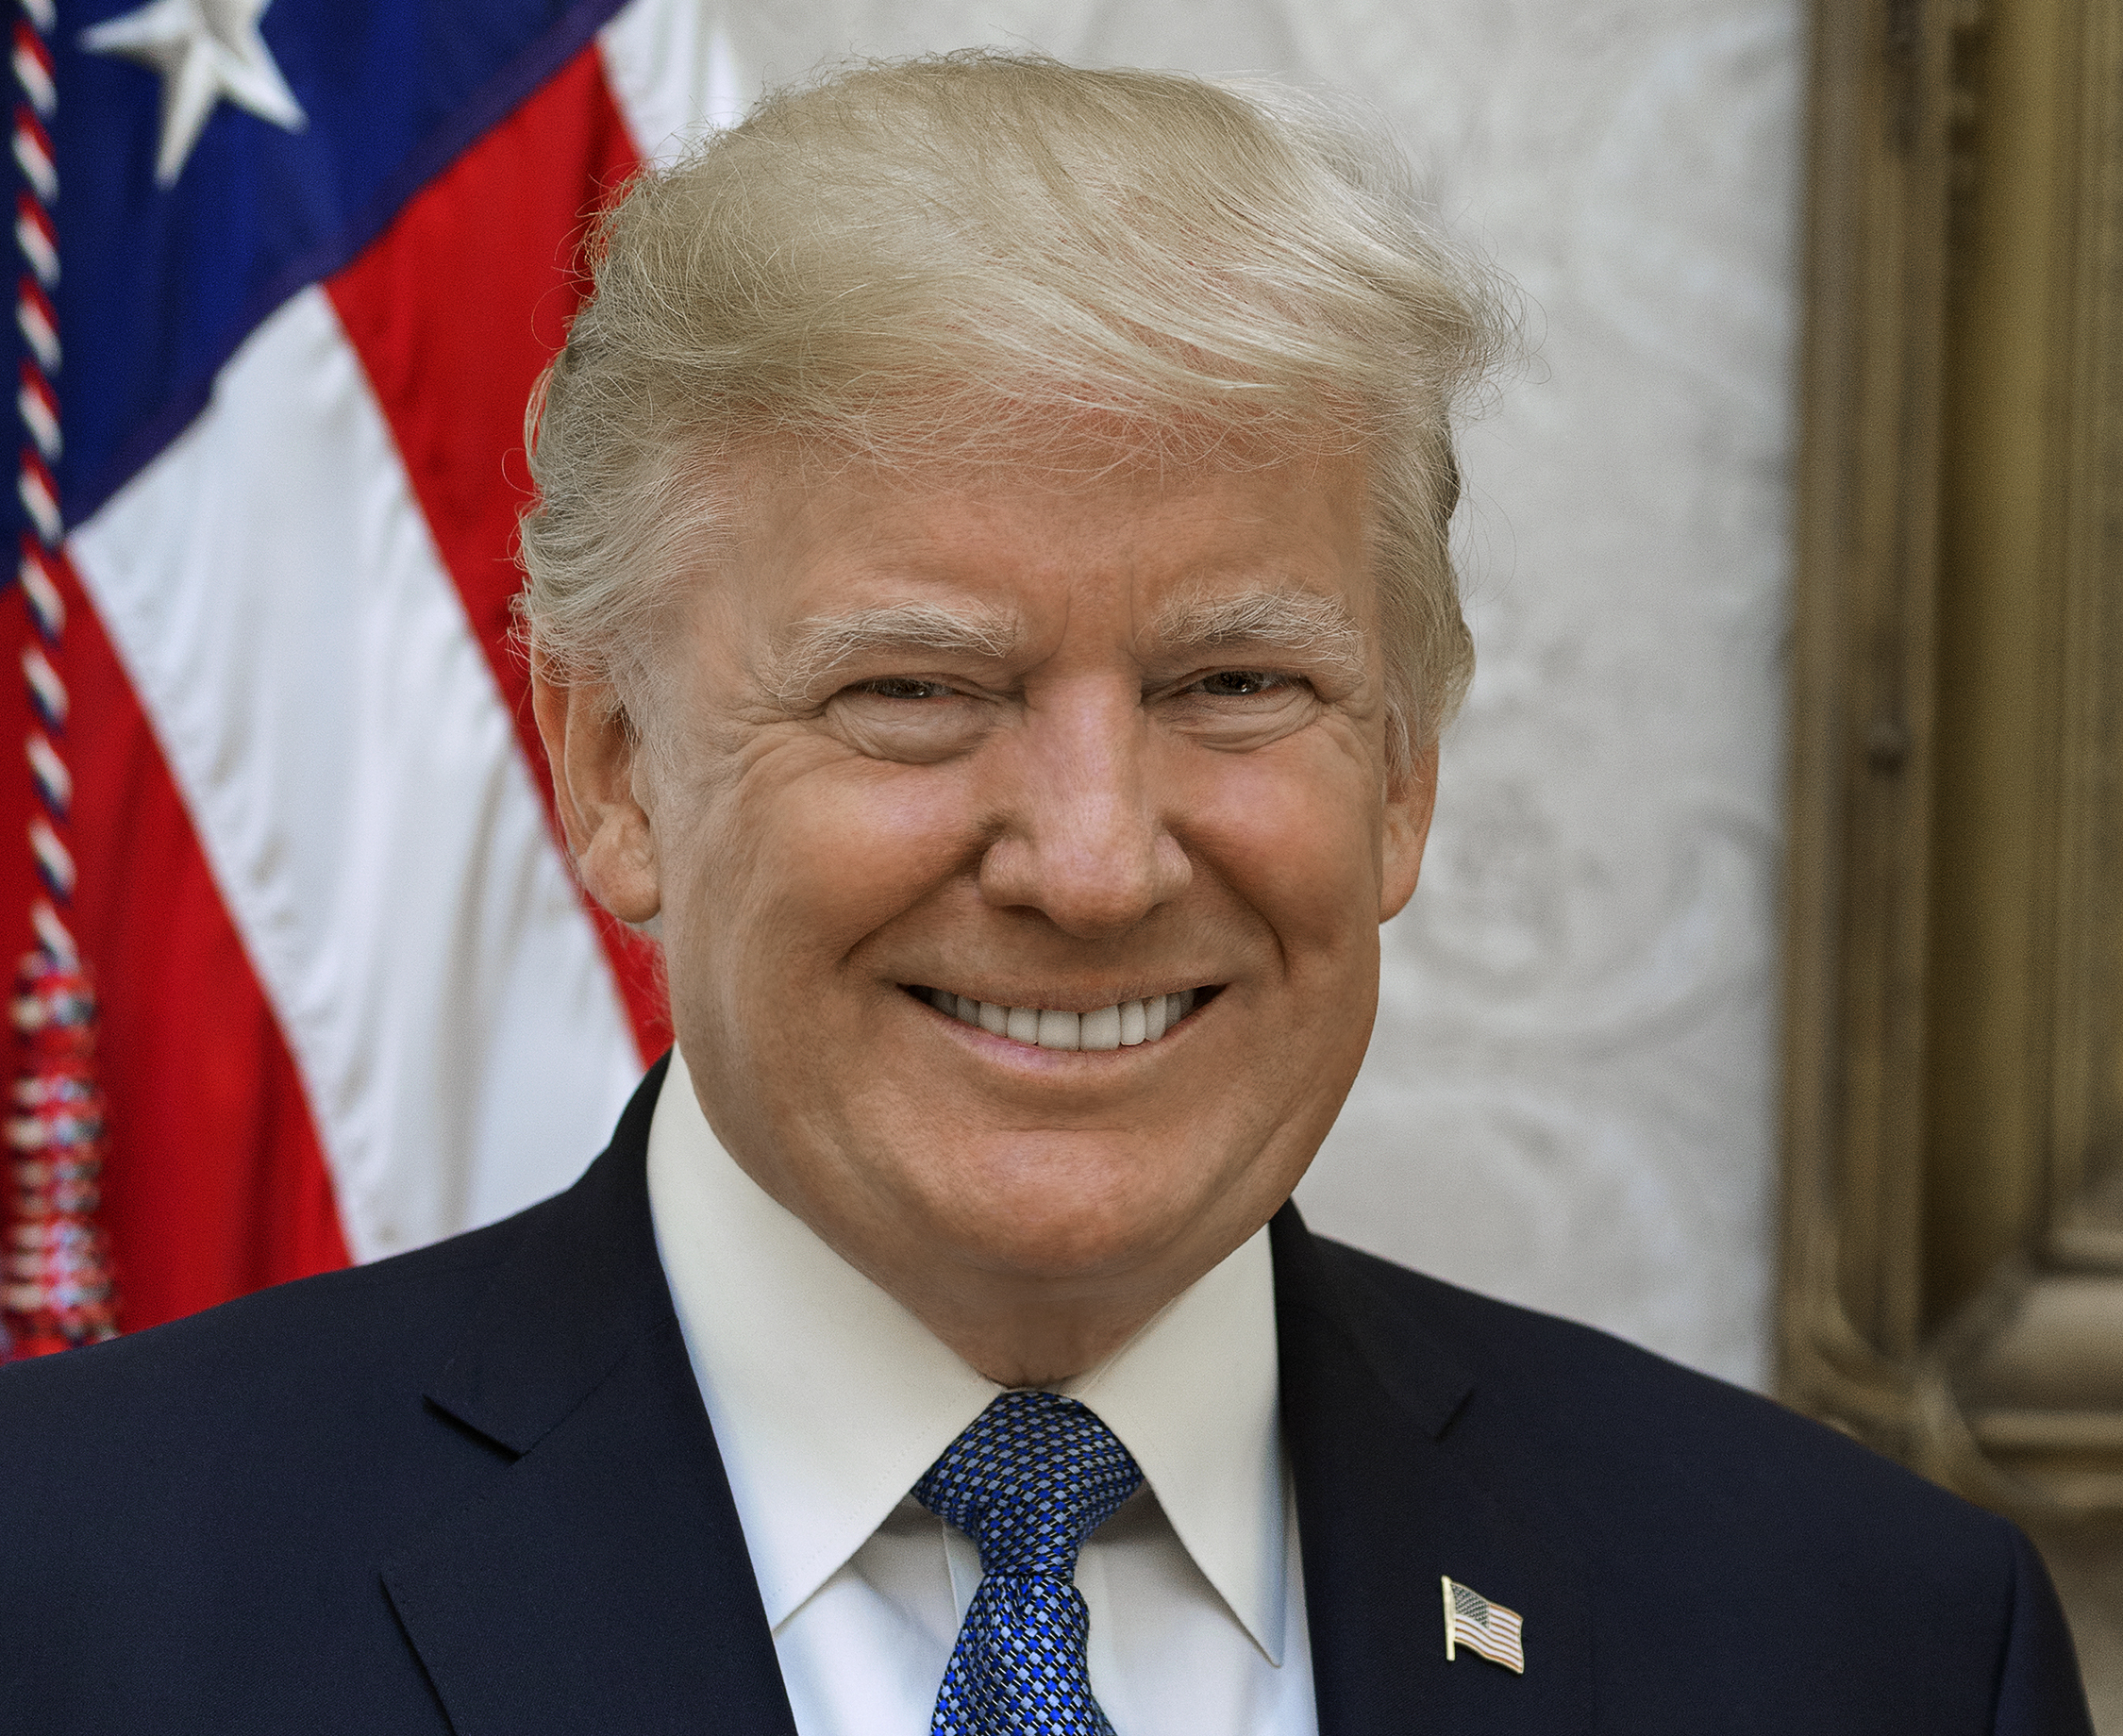 Donald Trump Presidential Photo